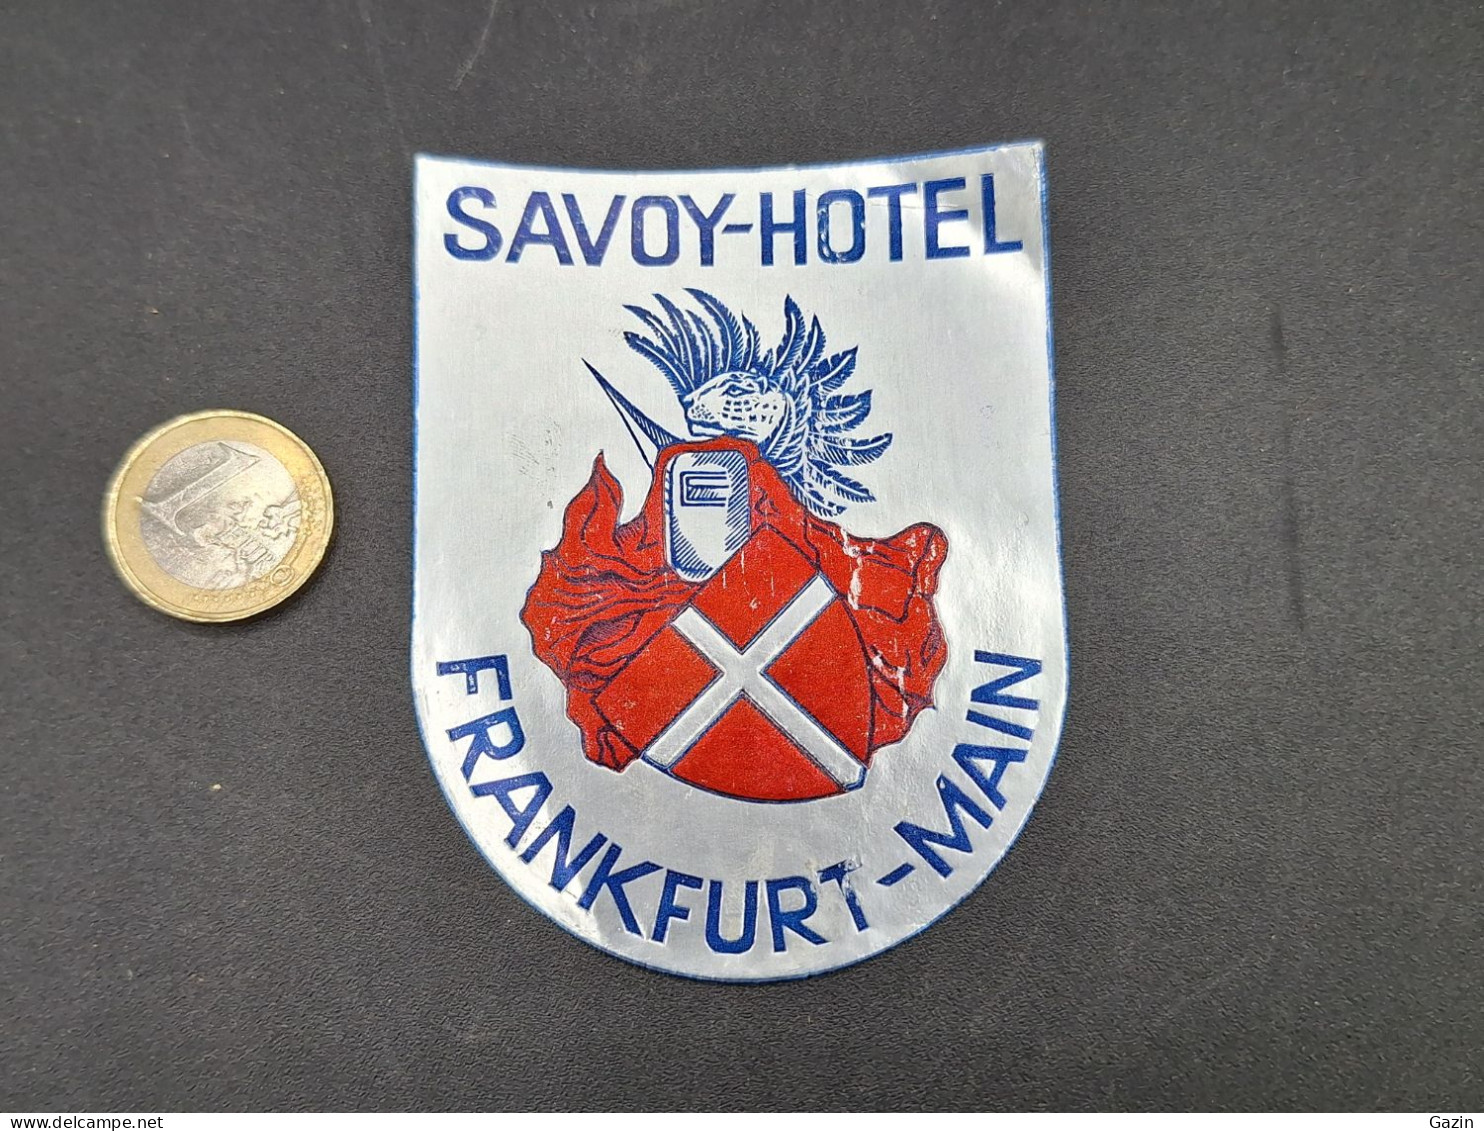 C7/3 - Hotel Savoy * Frankfurt - Main * Germany *  Luggage Lable * Rótulo * Etiqueta - Hotelaufkleber